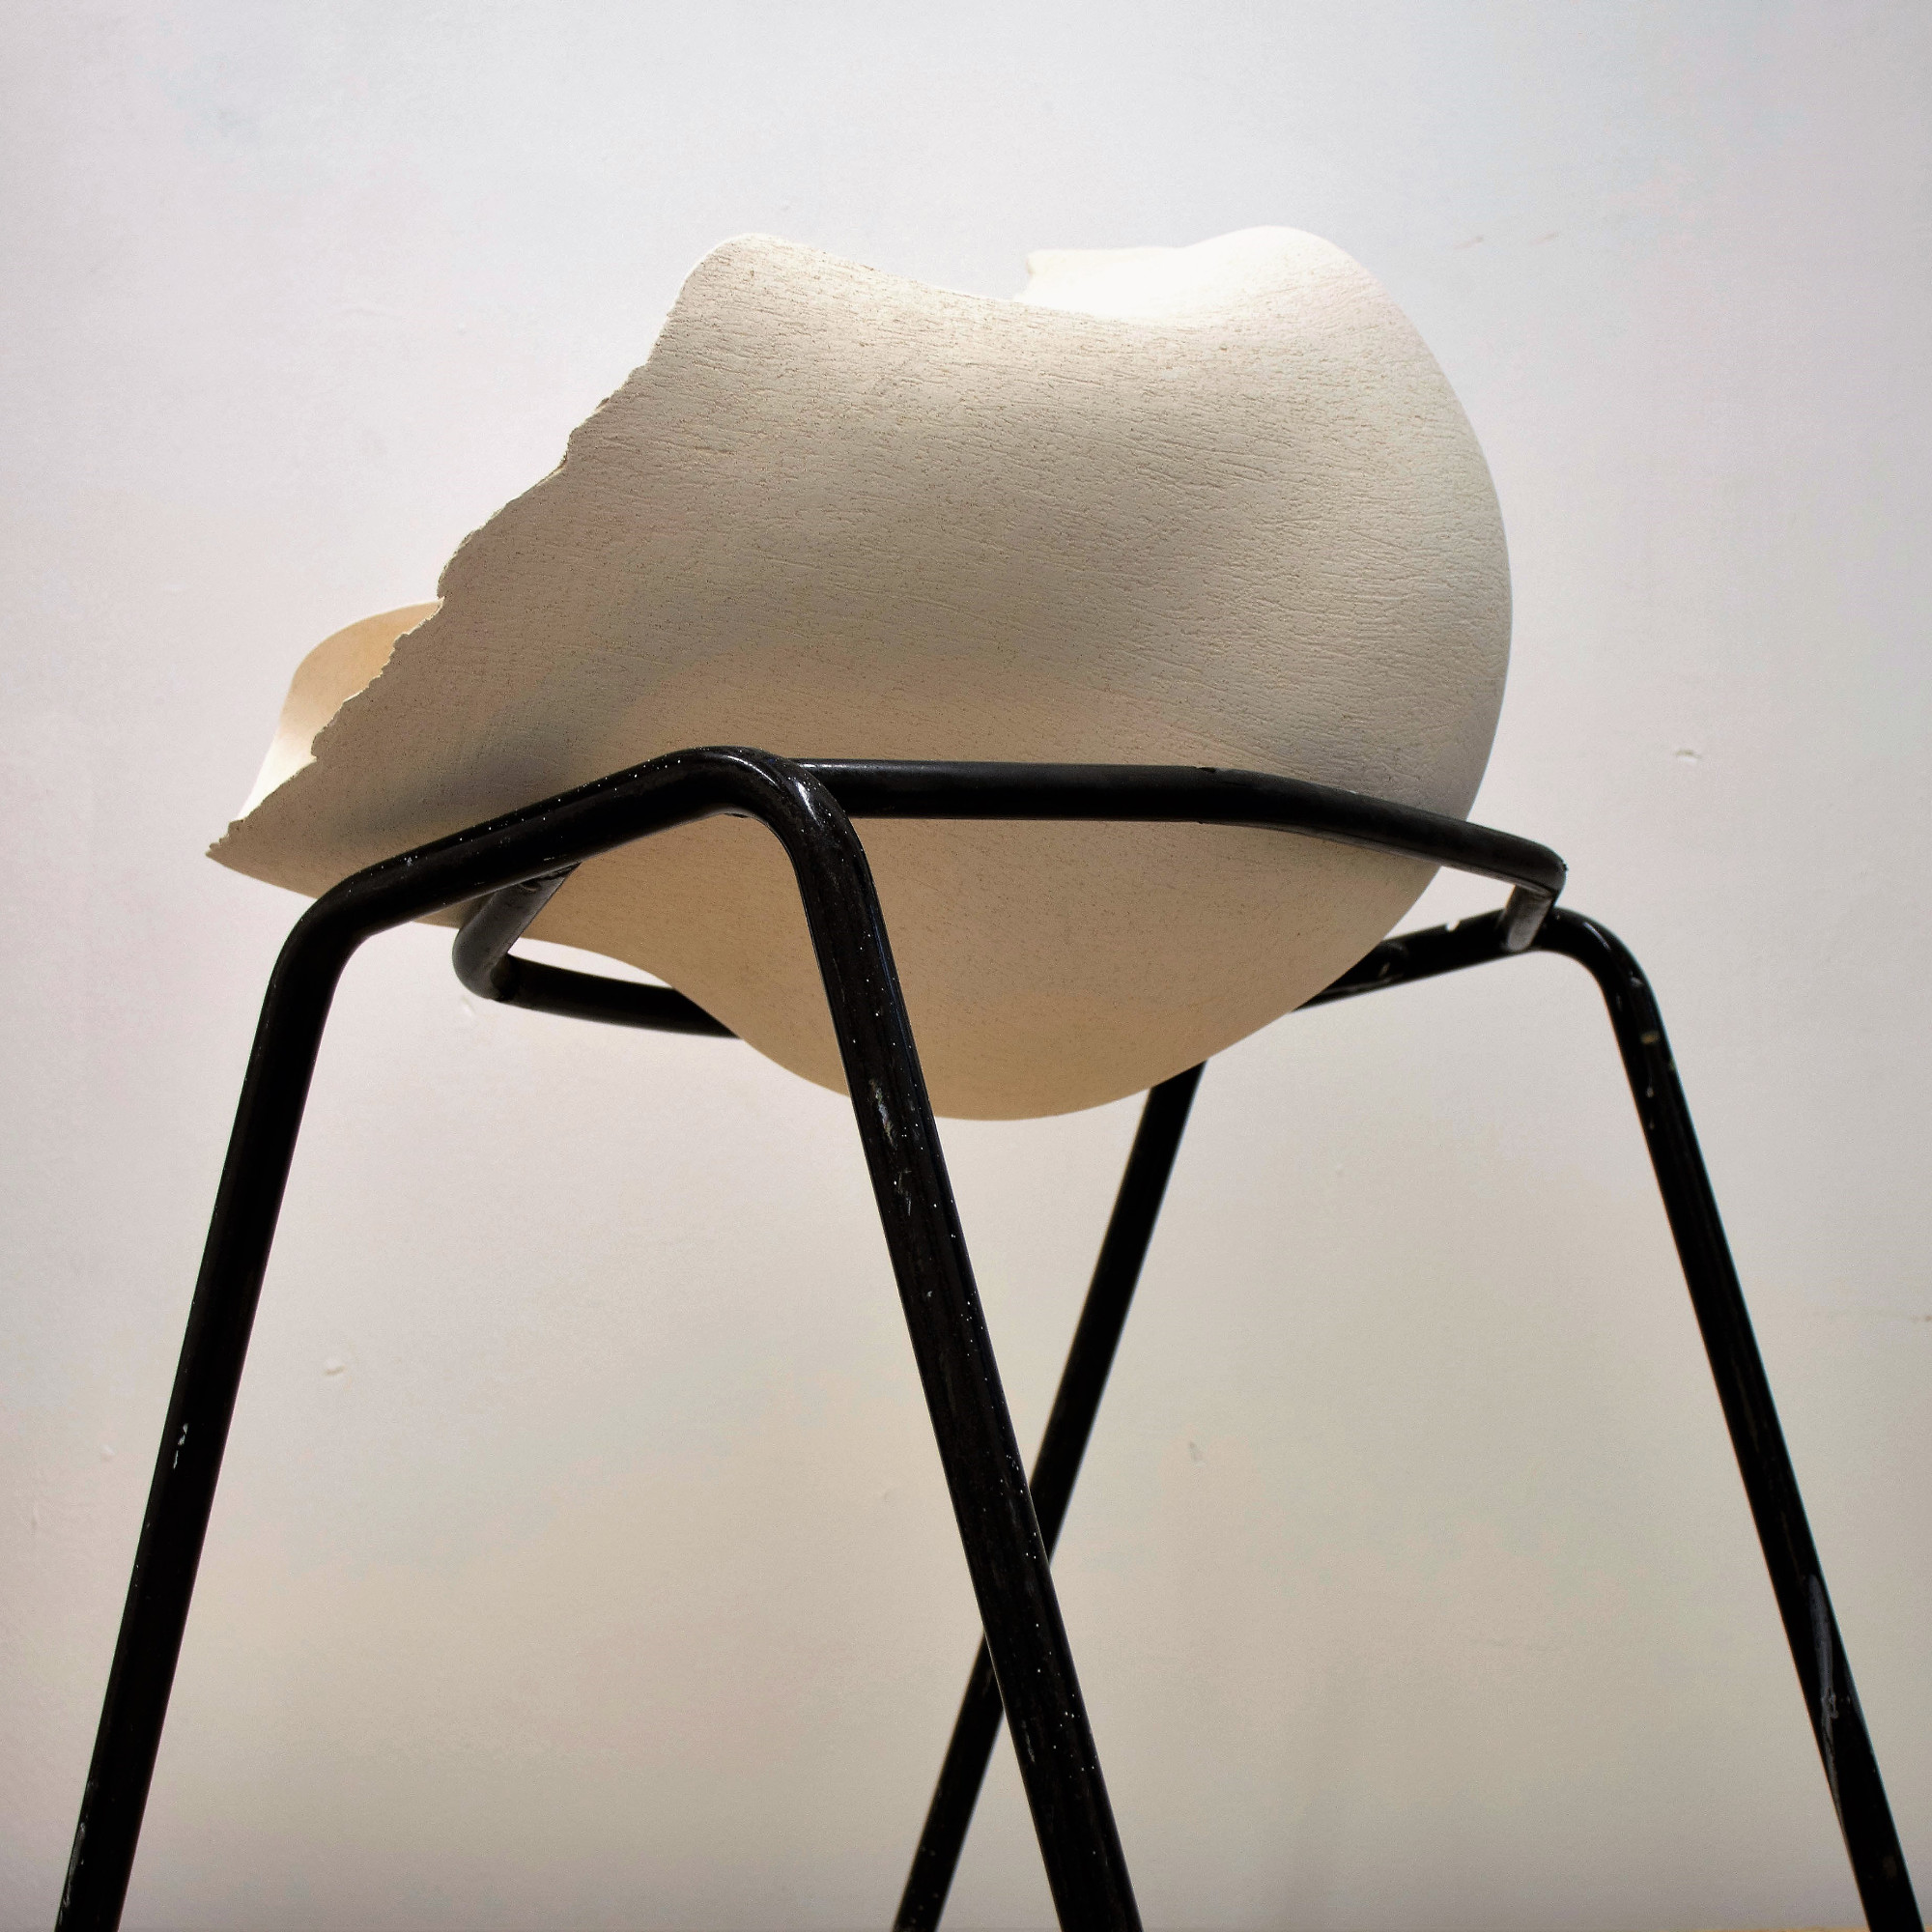 Objects listening I, 2020, Installation - Ceramic, tubular steel frame - Sarah Strachan